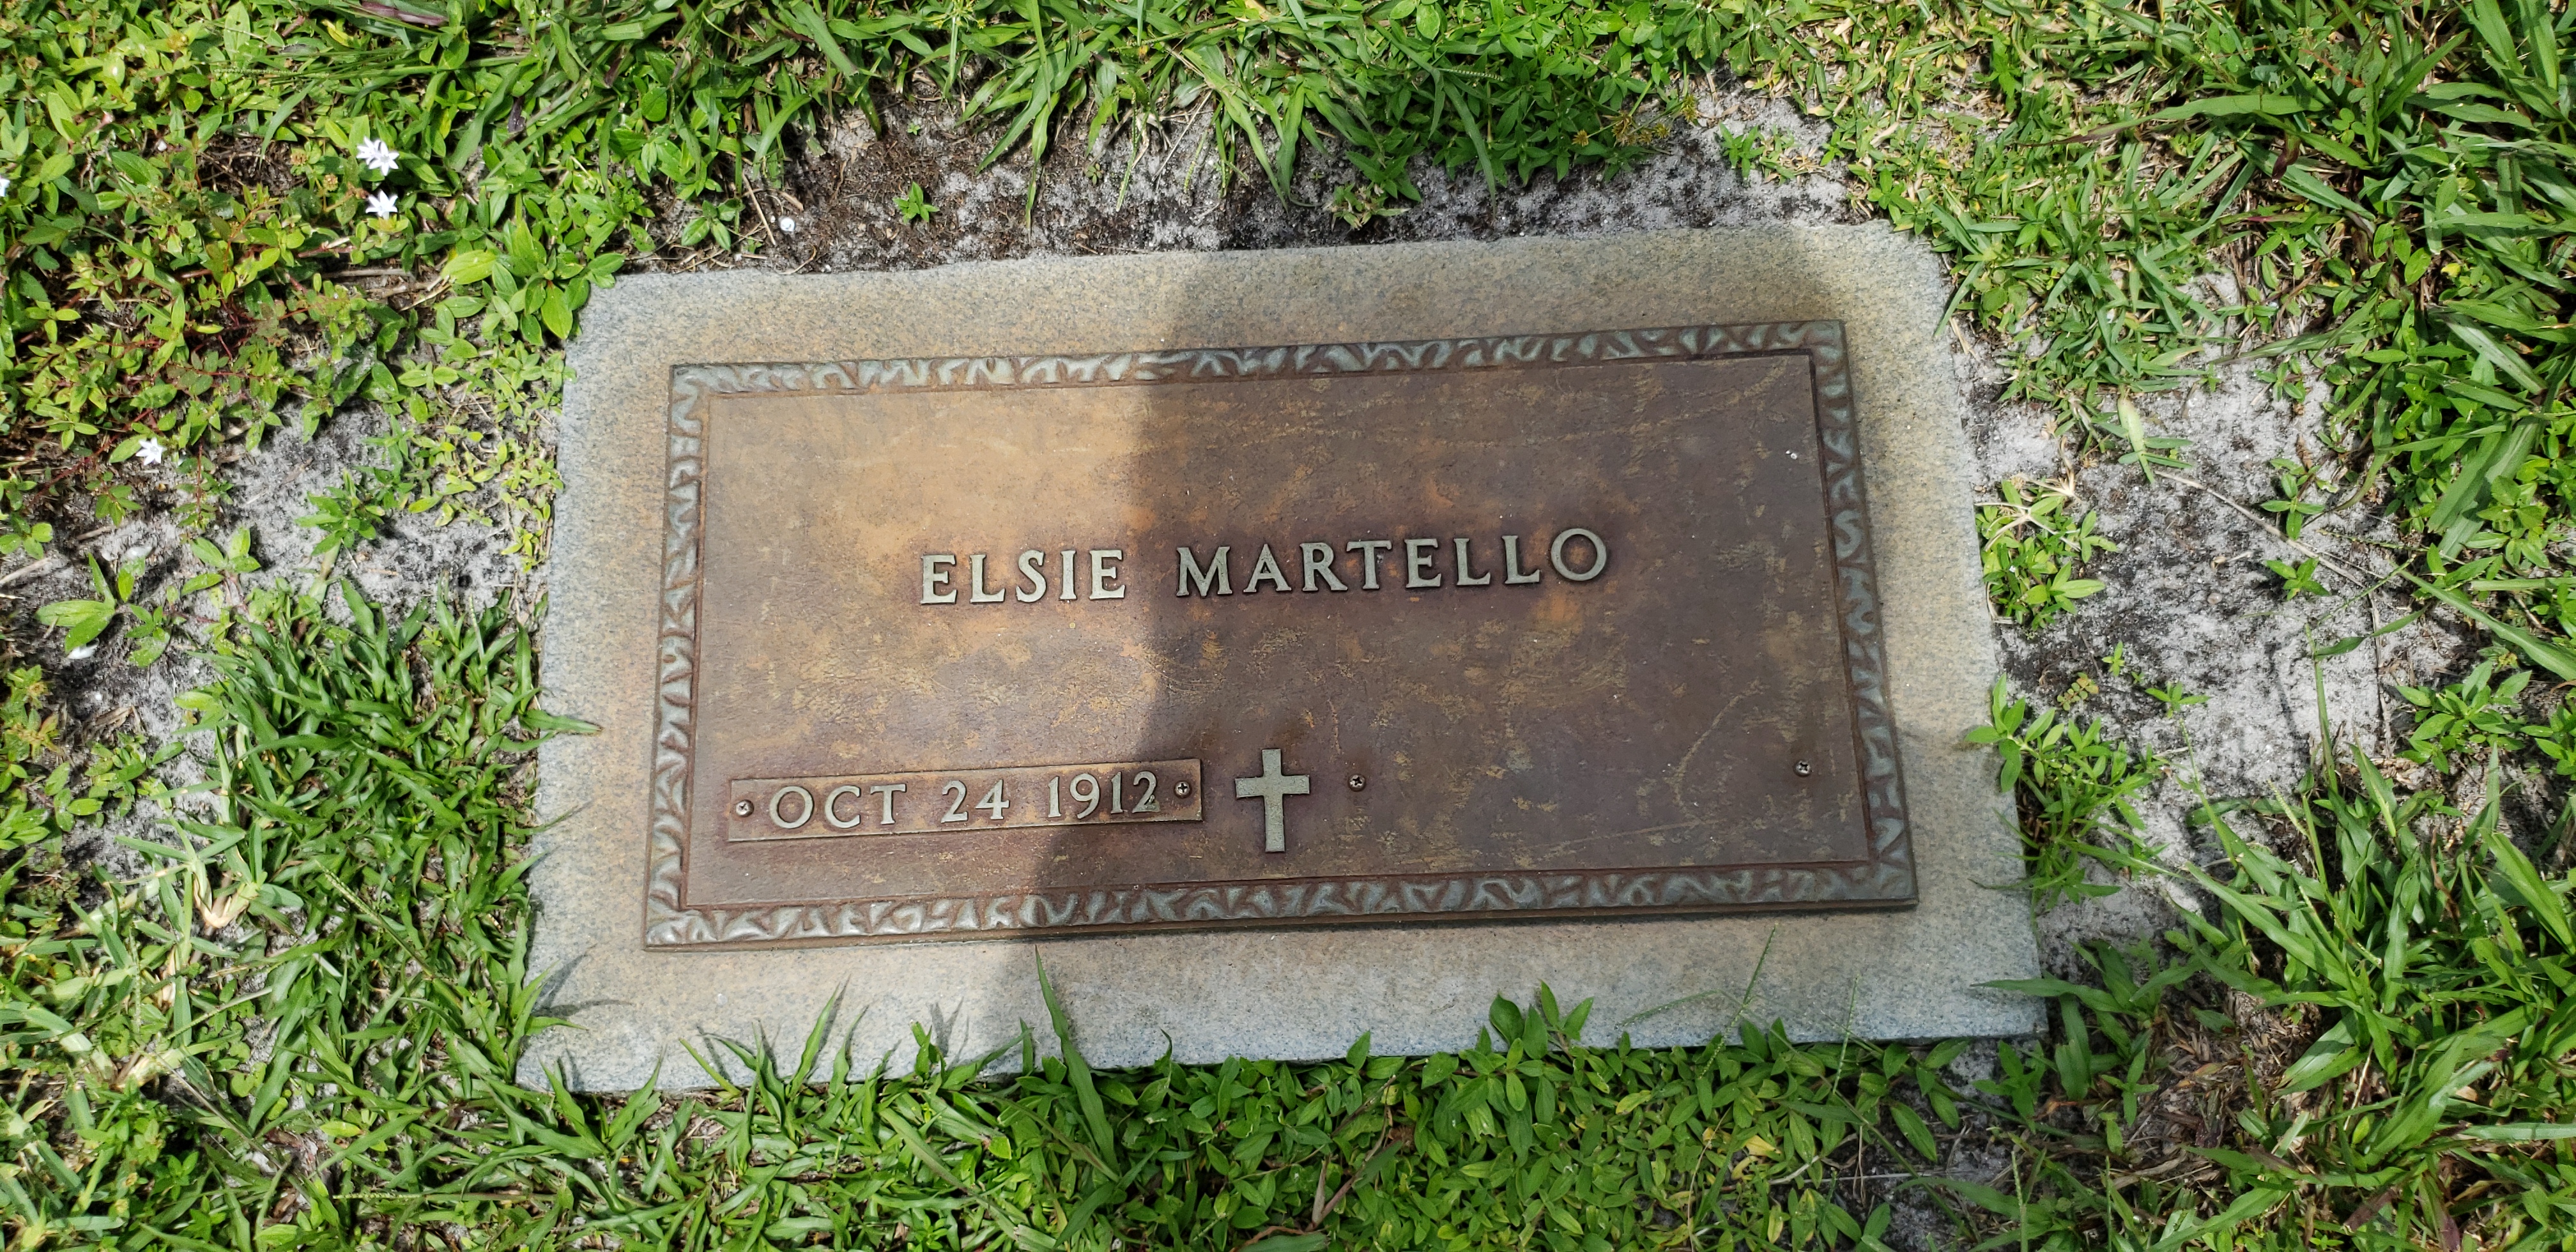 Elsie Martello